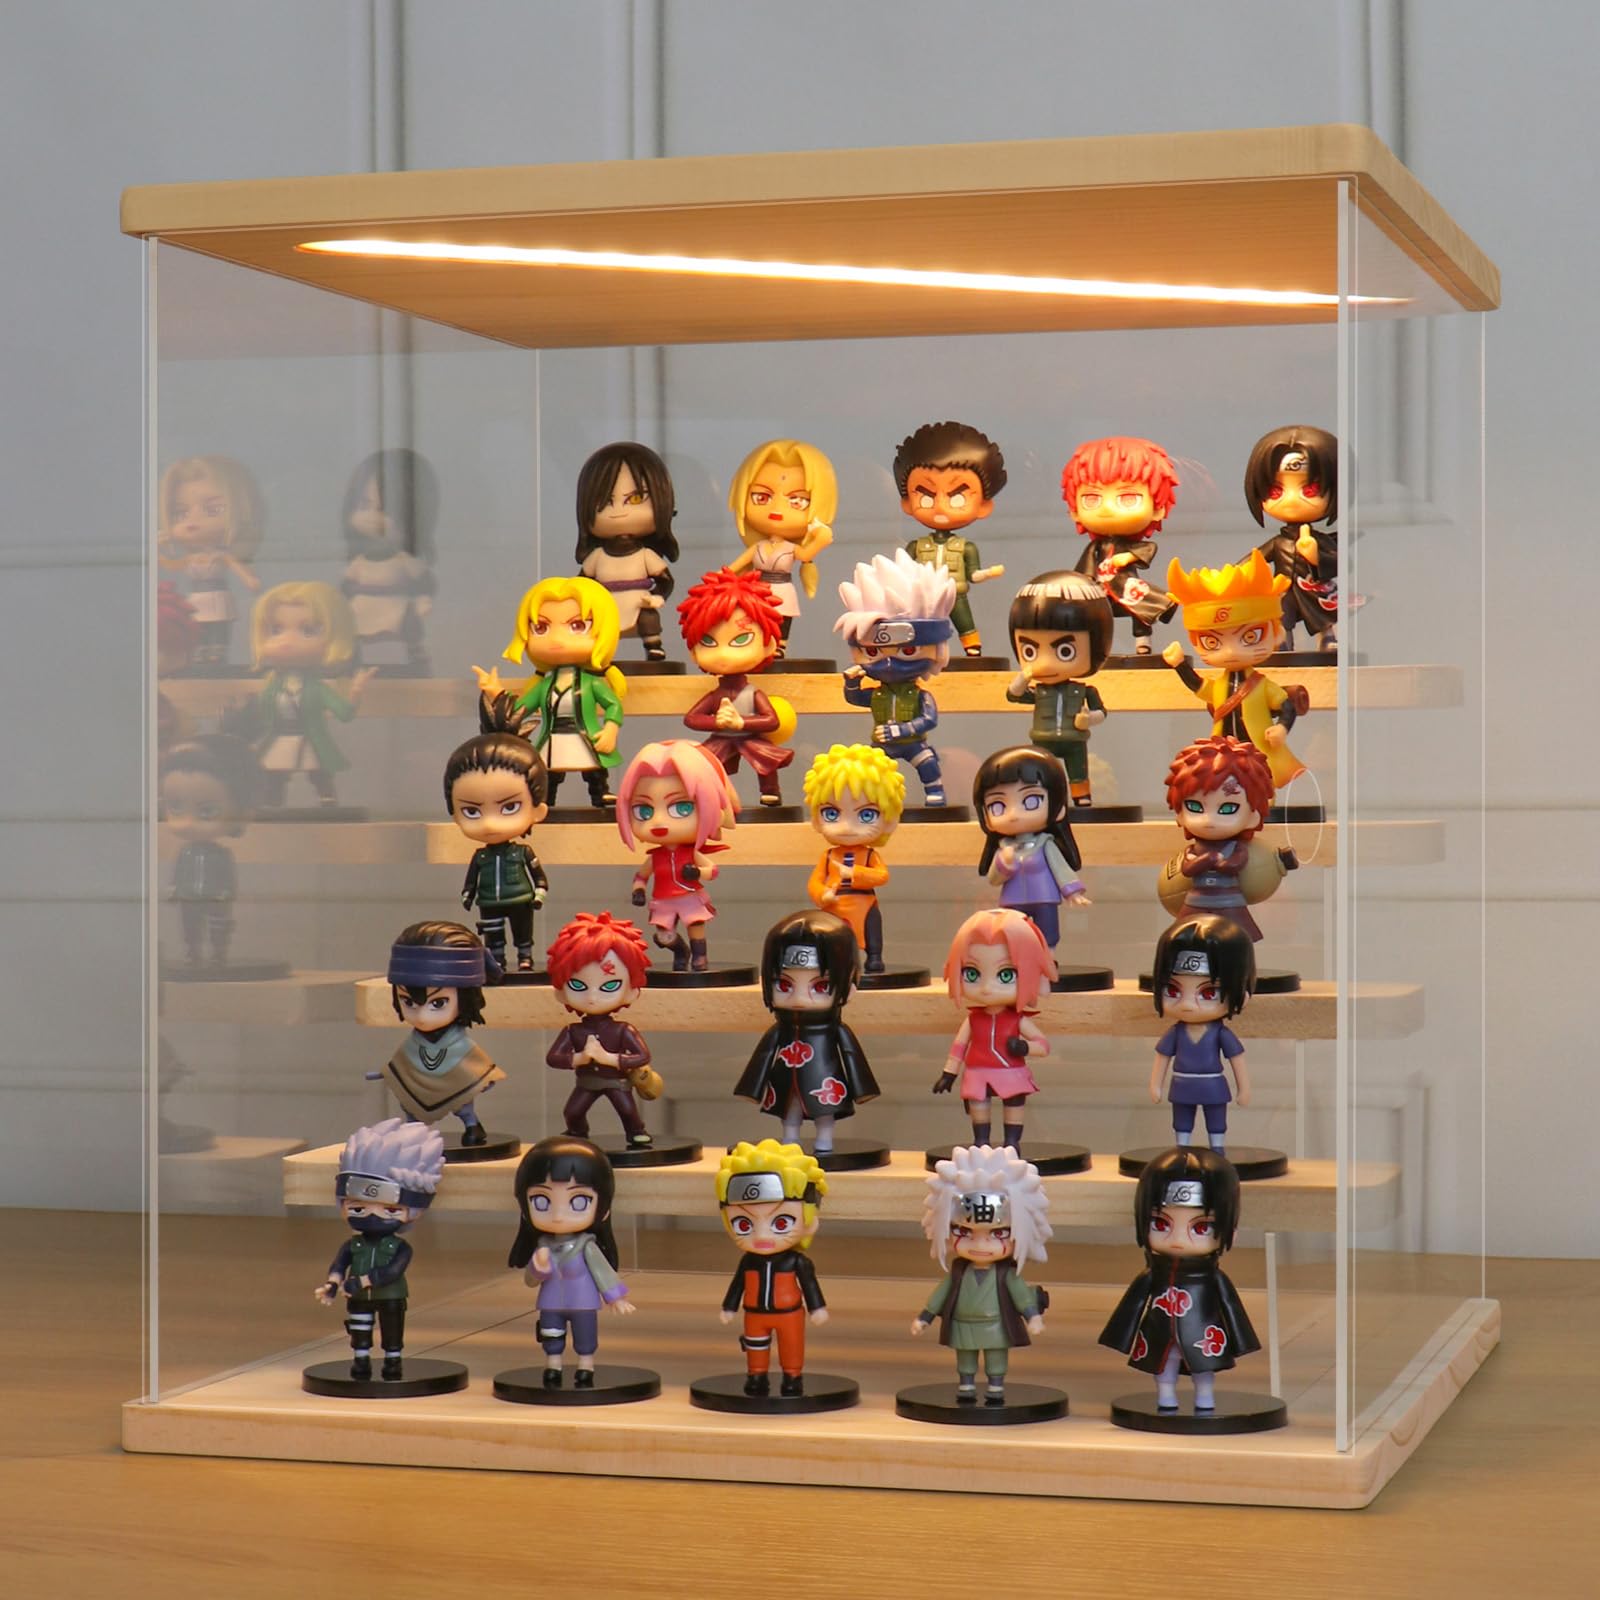 Anime Figurines in Arcade Display Case - FLAVORFUL JOURNEYSFLAVORFUL  JOURNEYS